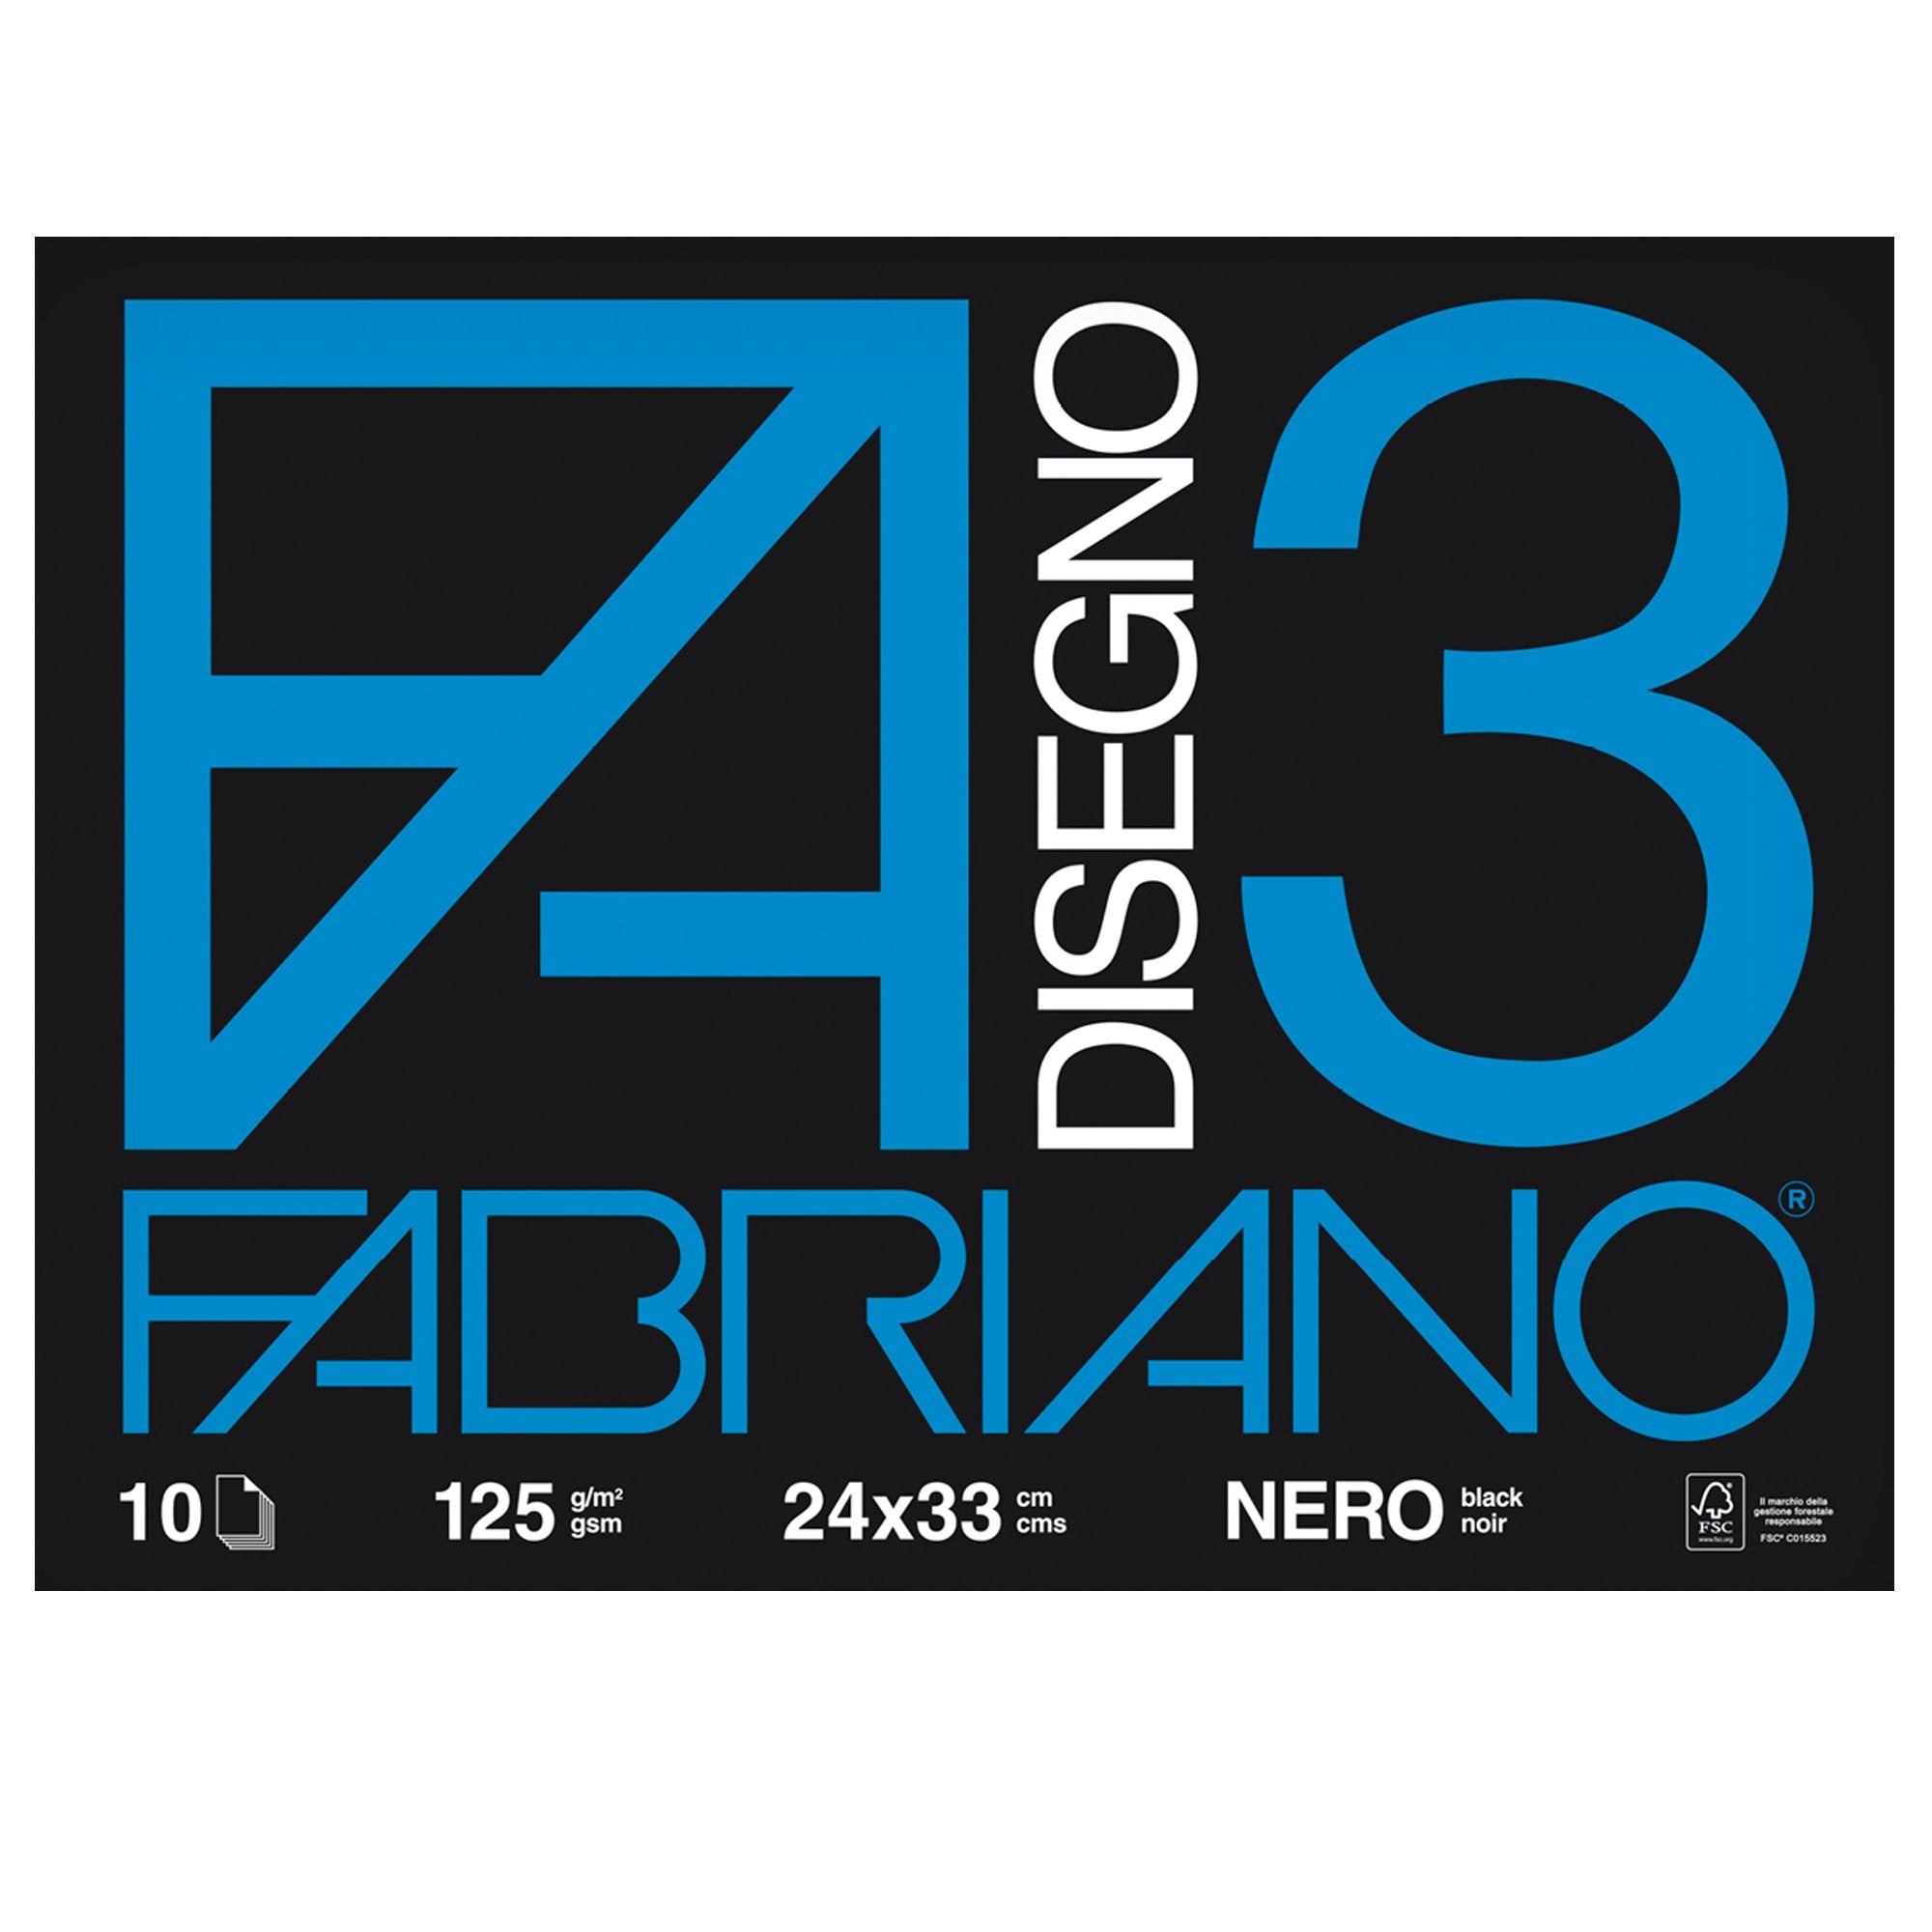 fabriano-album-3-nero-24x33cm-fg-10-125gr